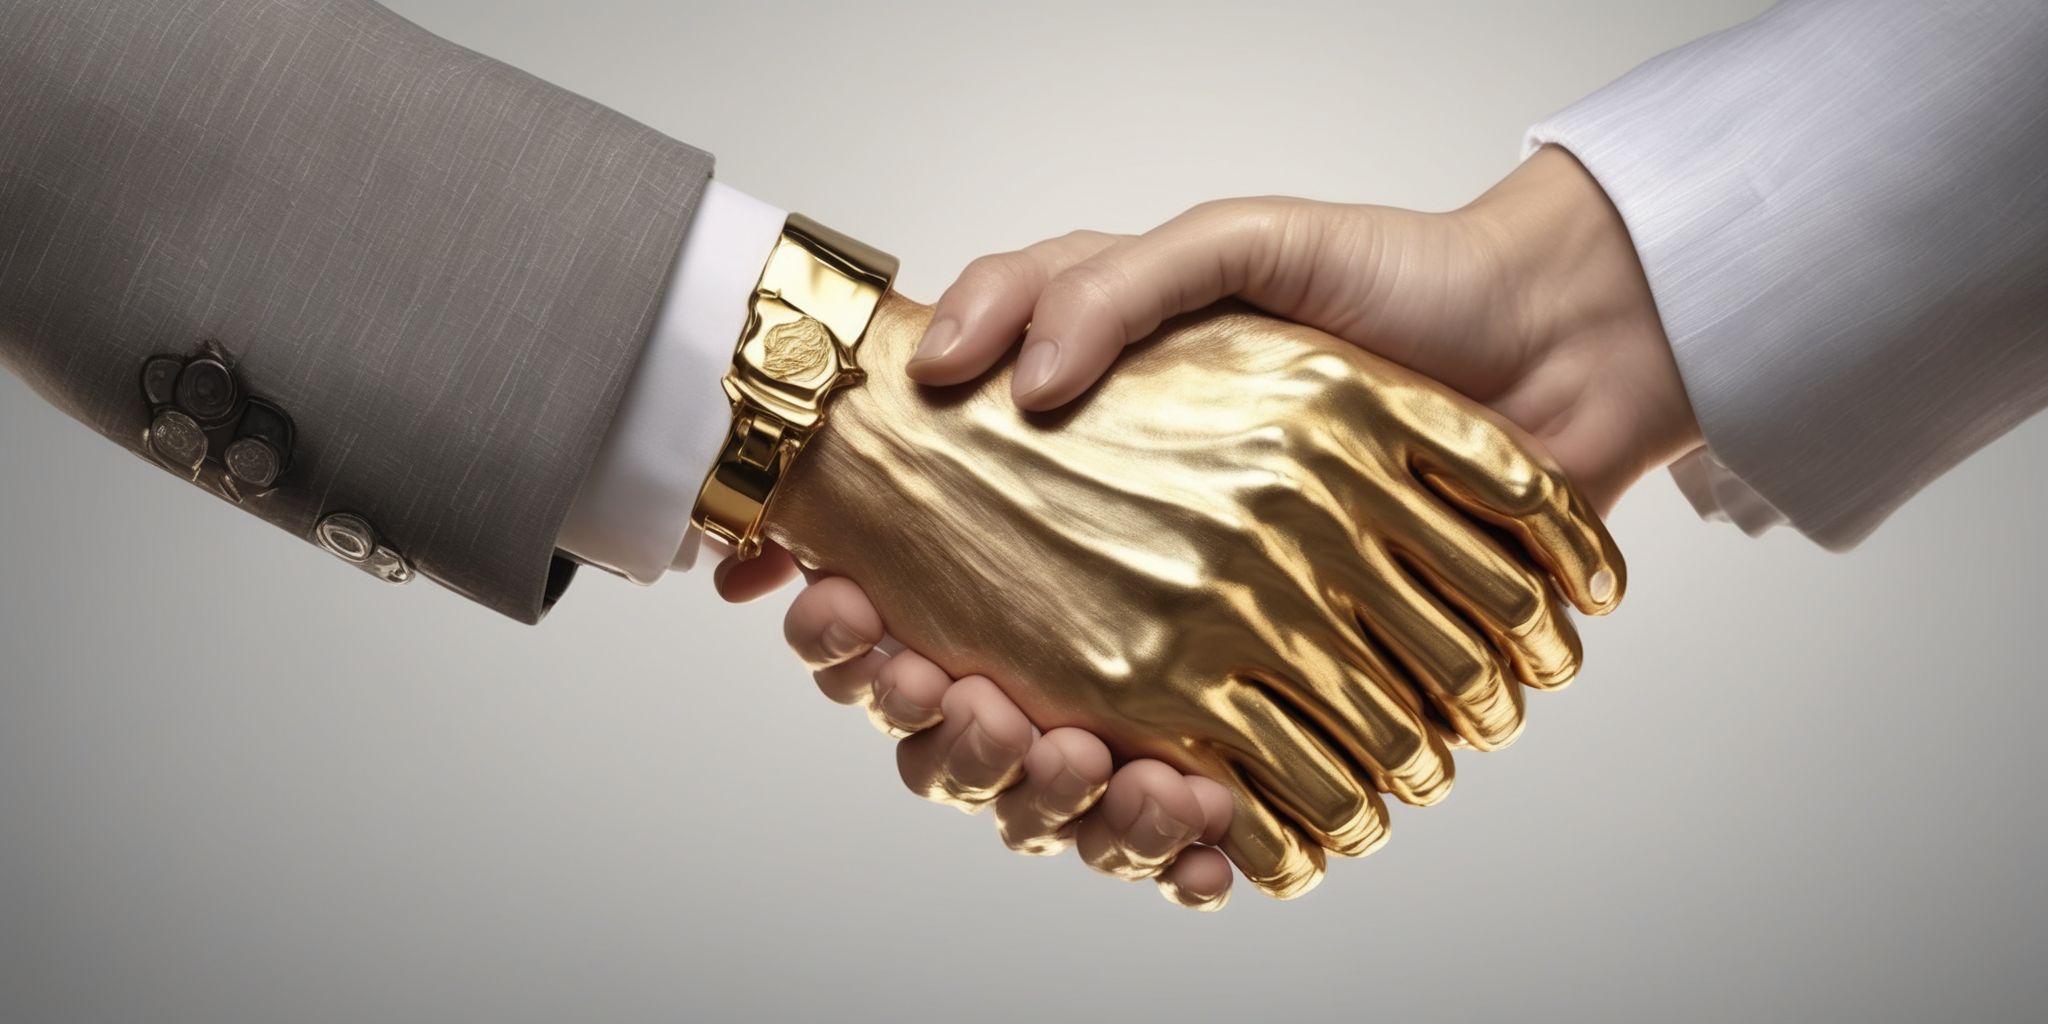 Golden handshake  in realistic, photographic style